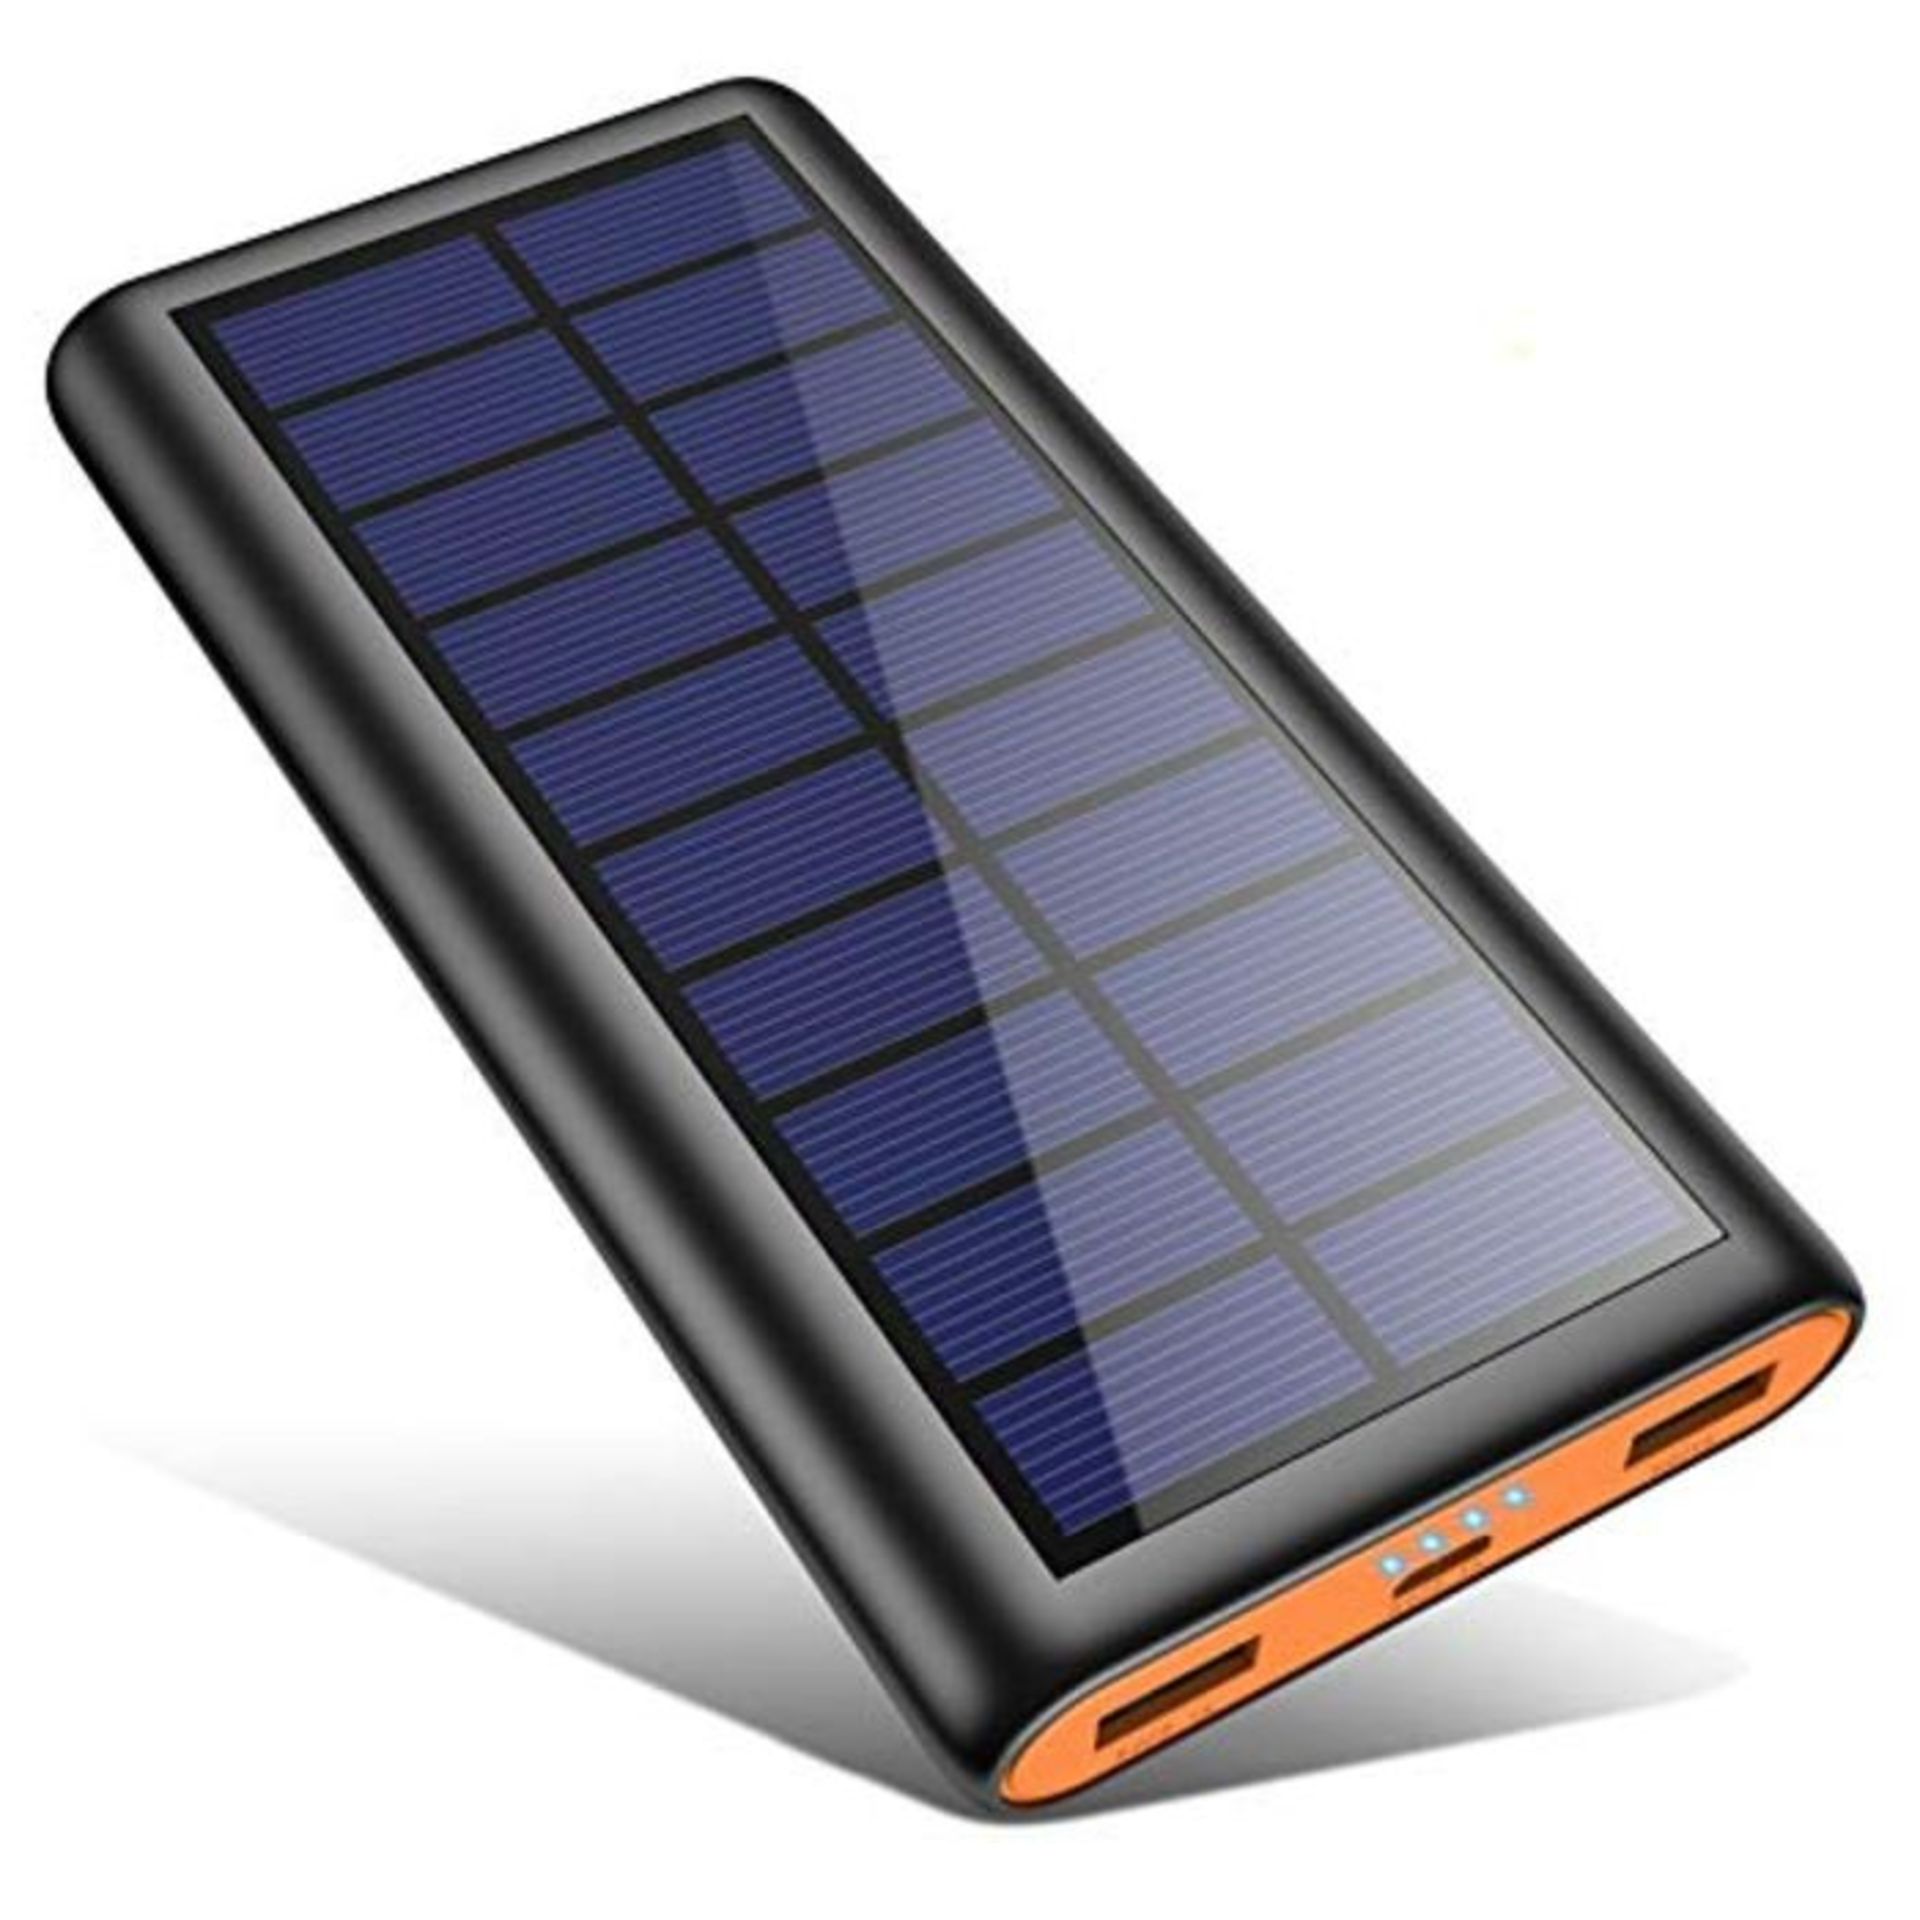 kilponen Solar Power Bank, 26800mAh Portable Charger High Capacity Fast Charge Externa